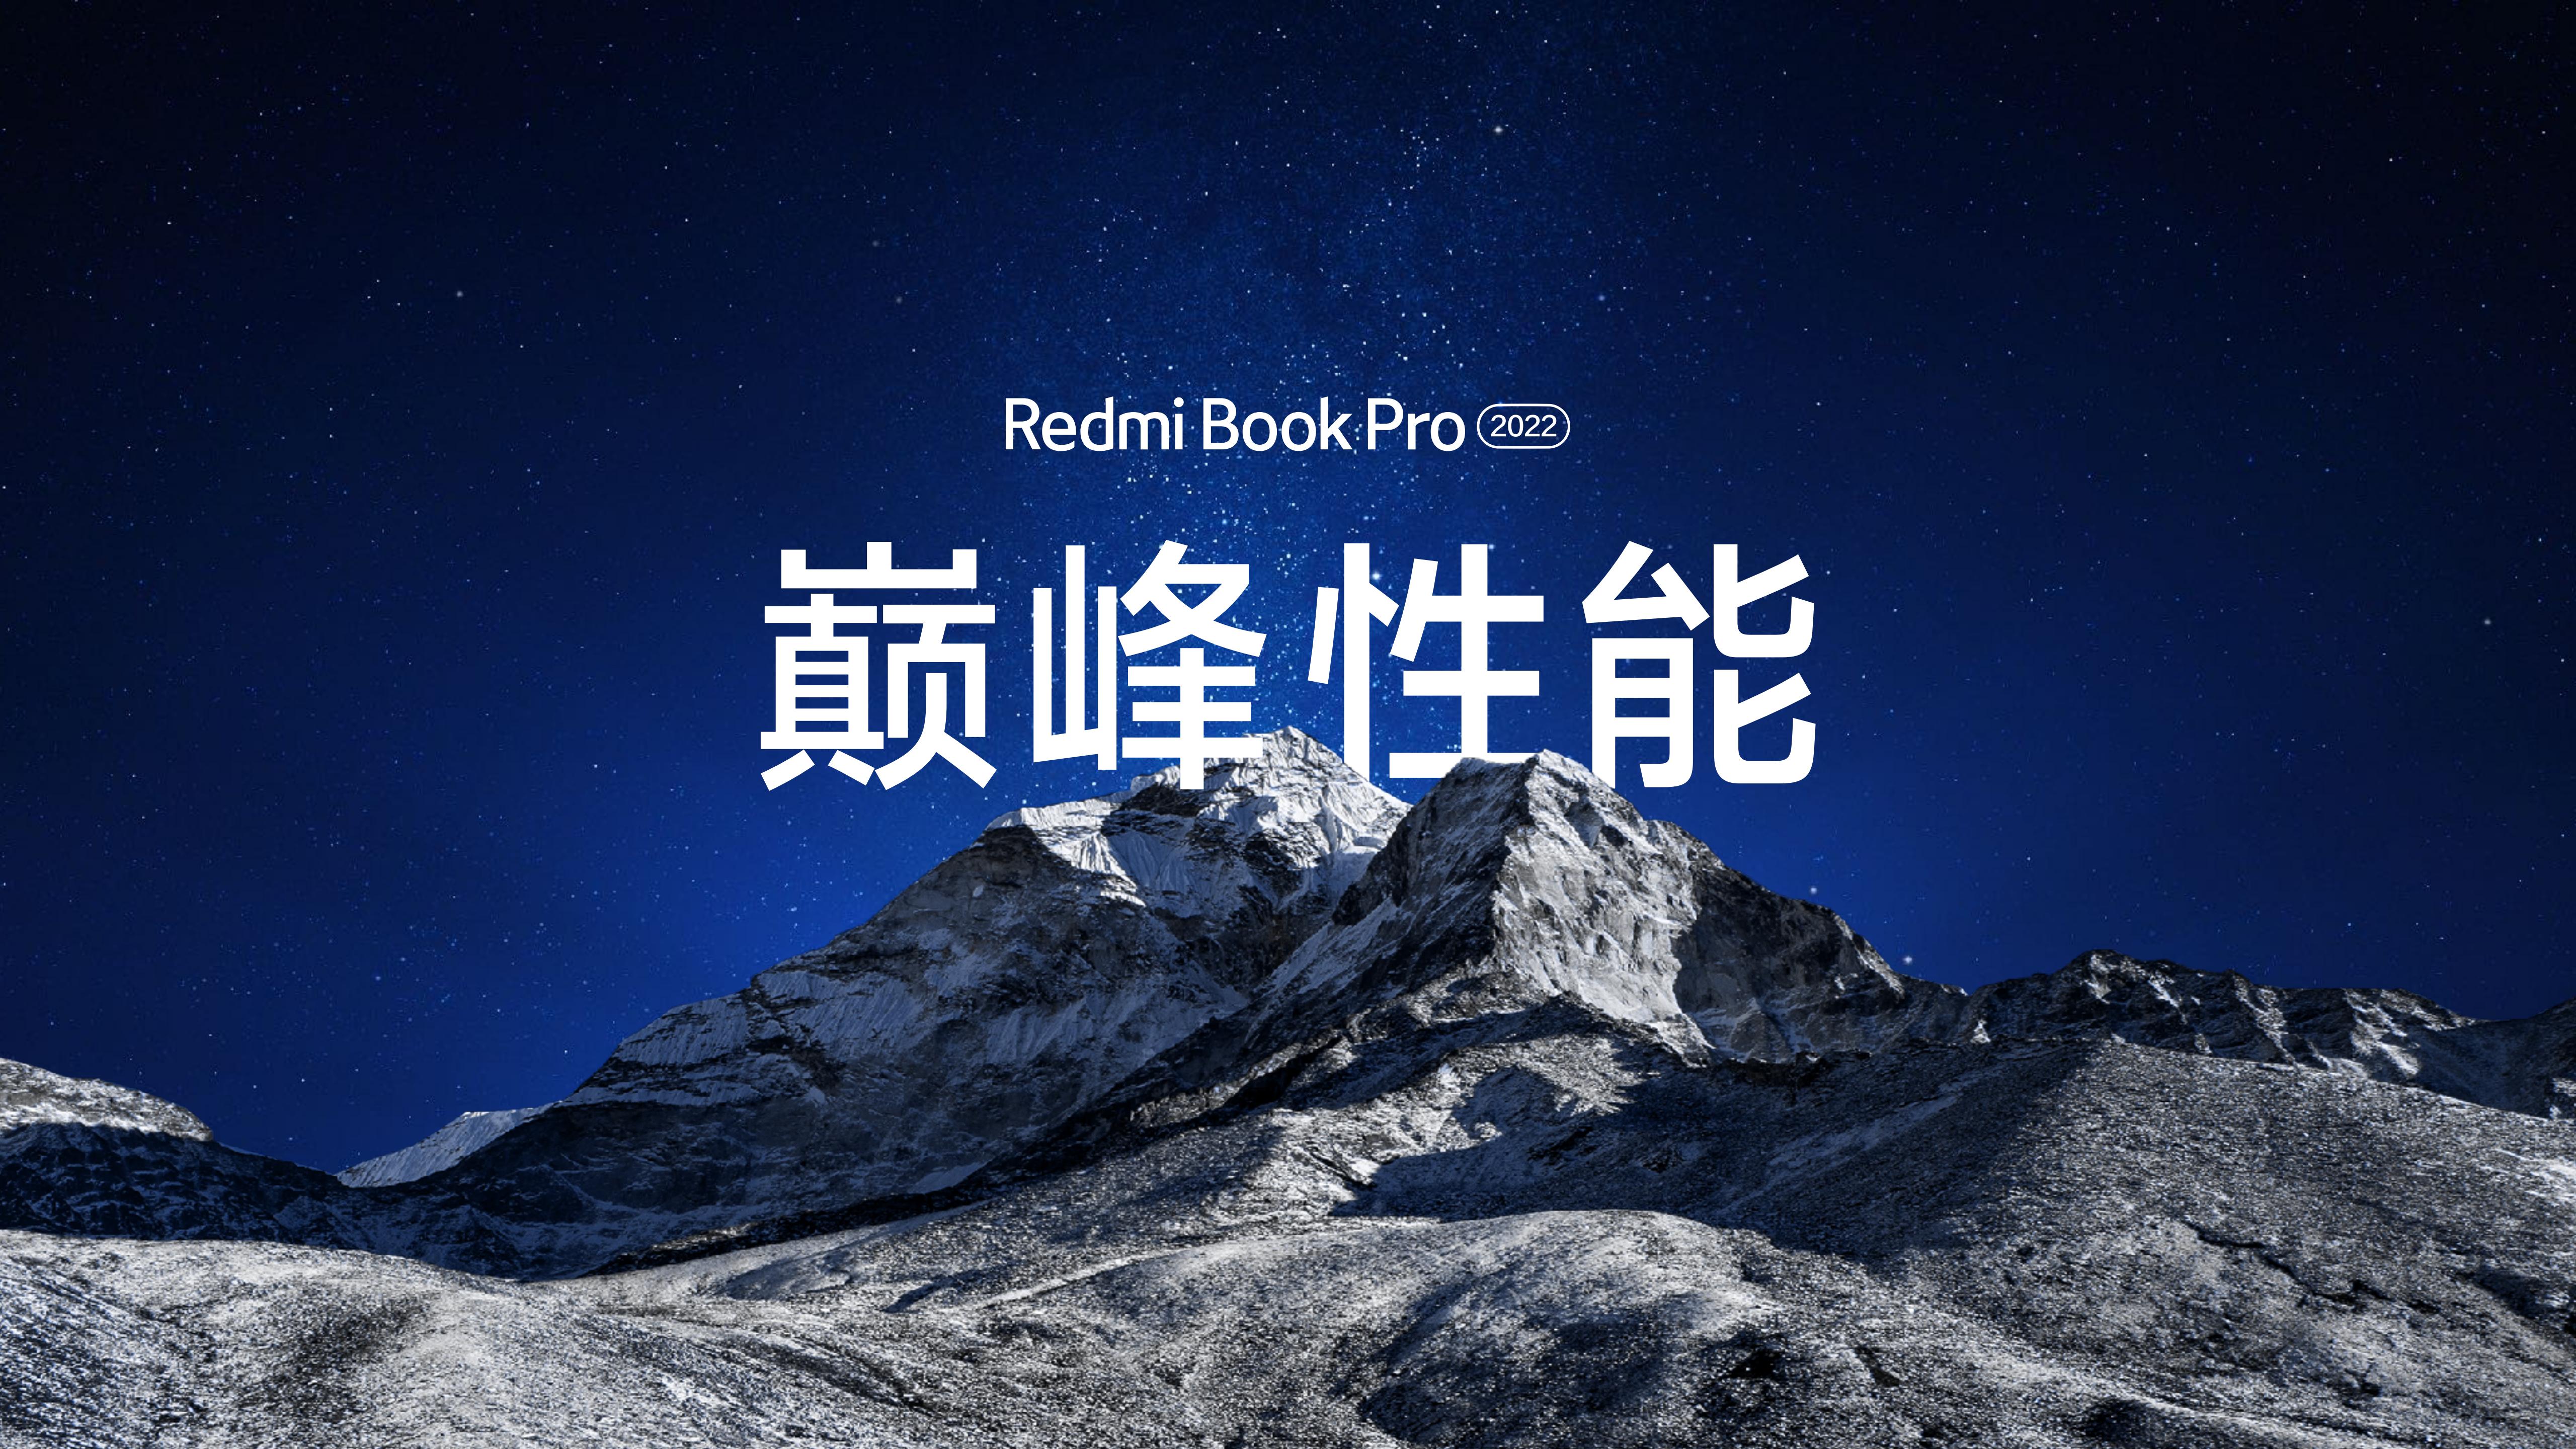 Redmi Book Pro 汹涌登场 20220913173410